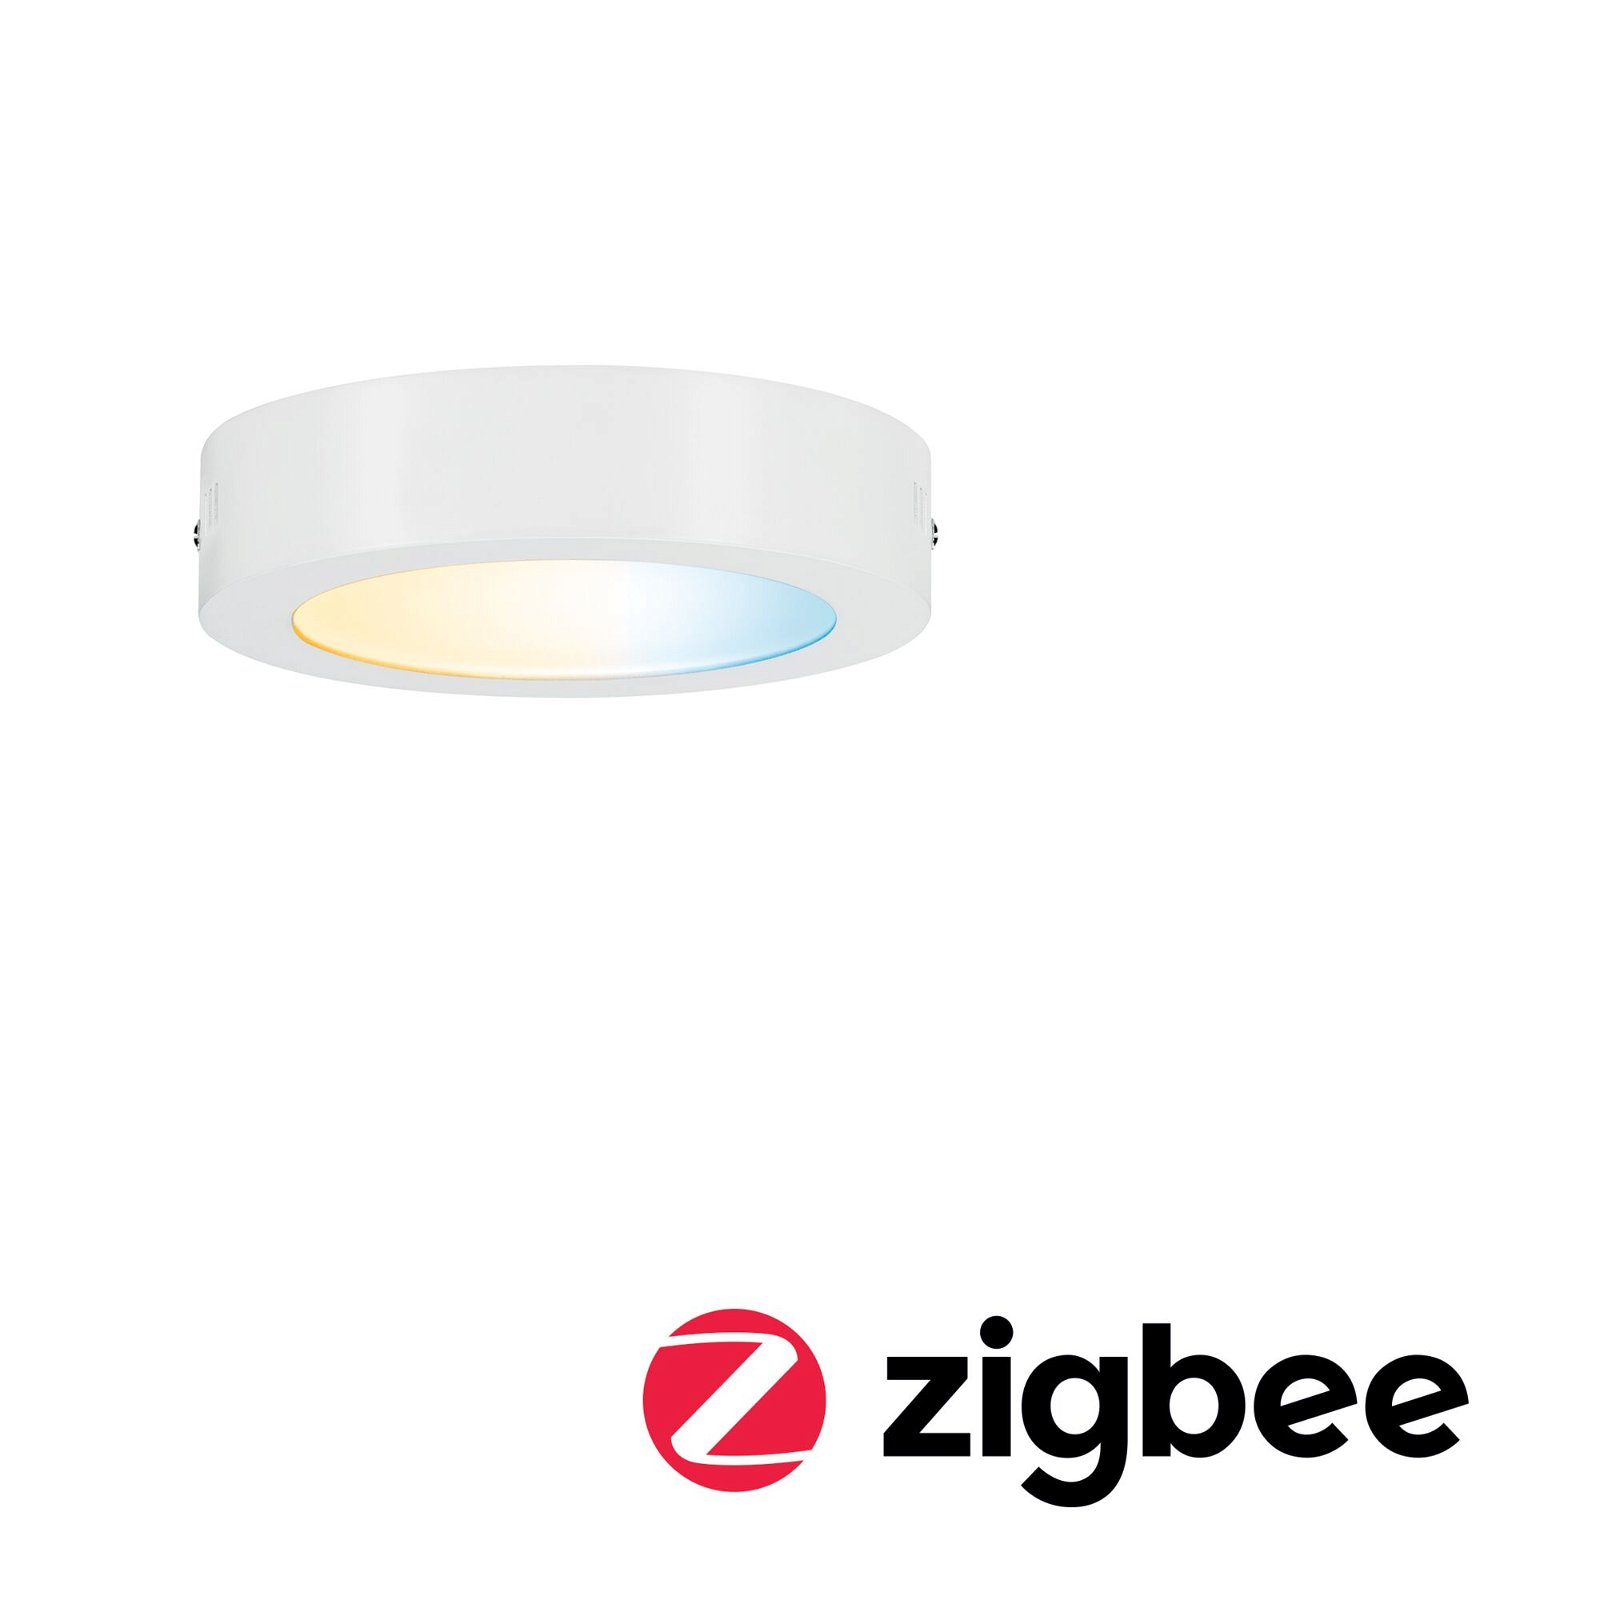 LED Panel Smart Home Zigbee Cesena rund 170mm Tunable White Weiß matt dimmbar